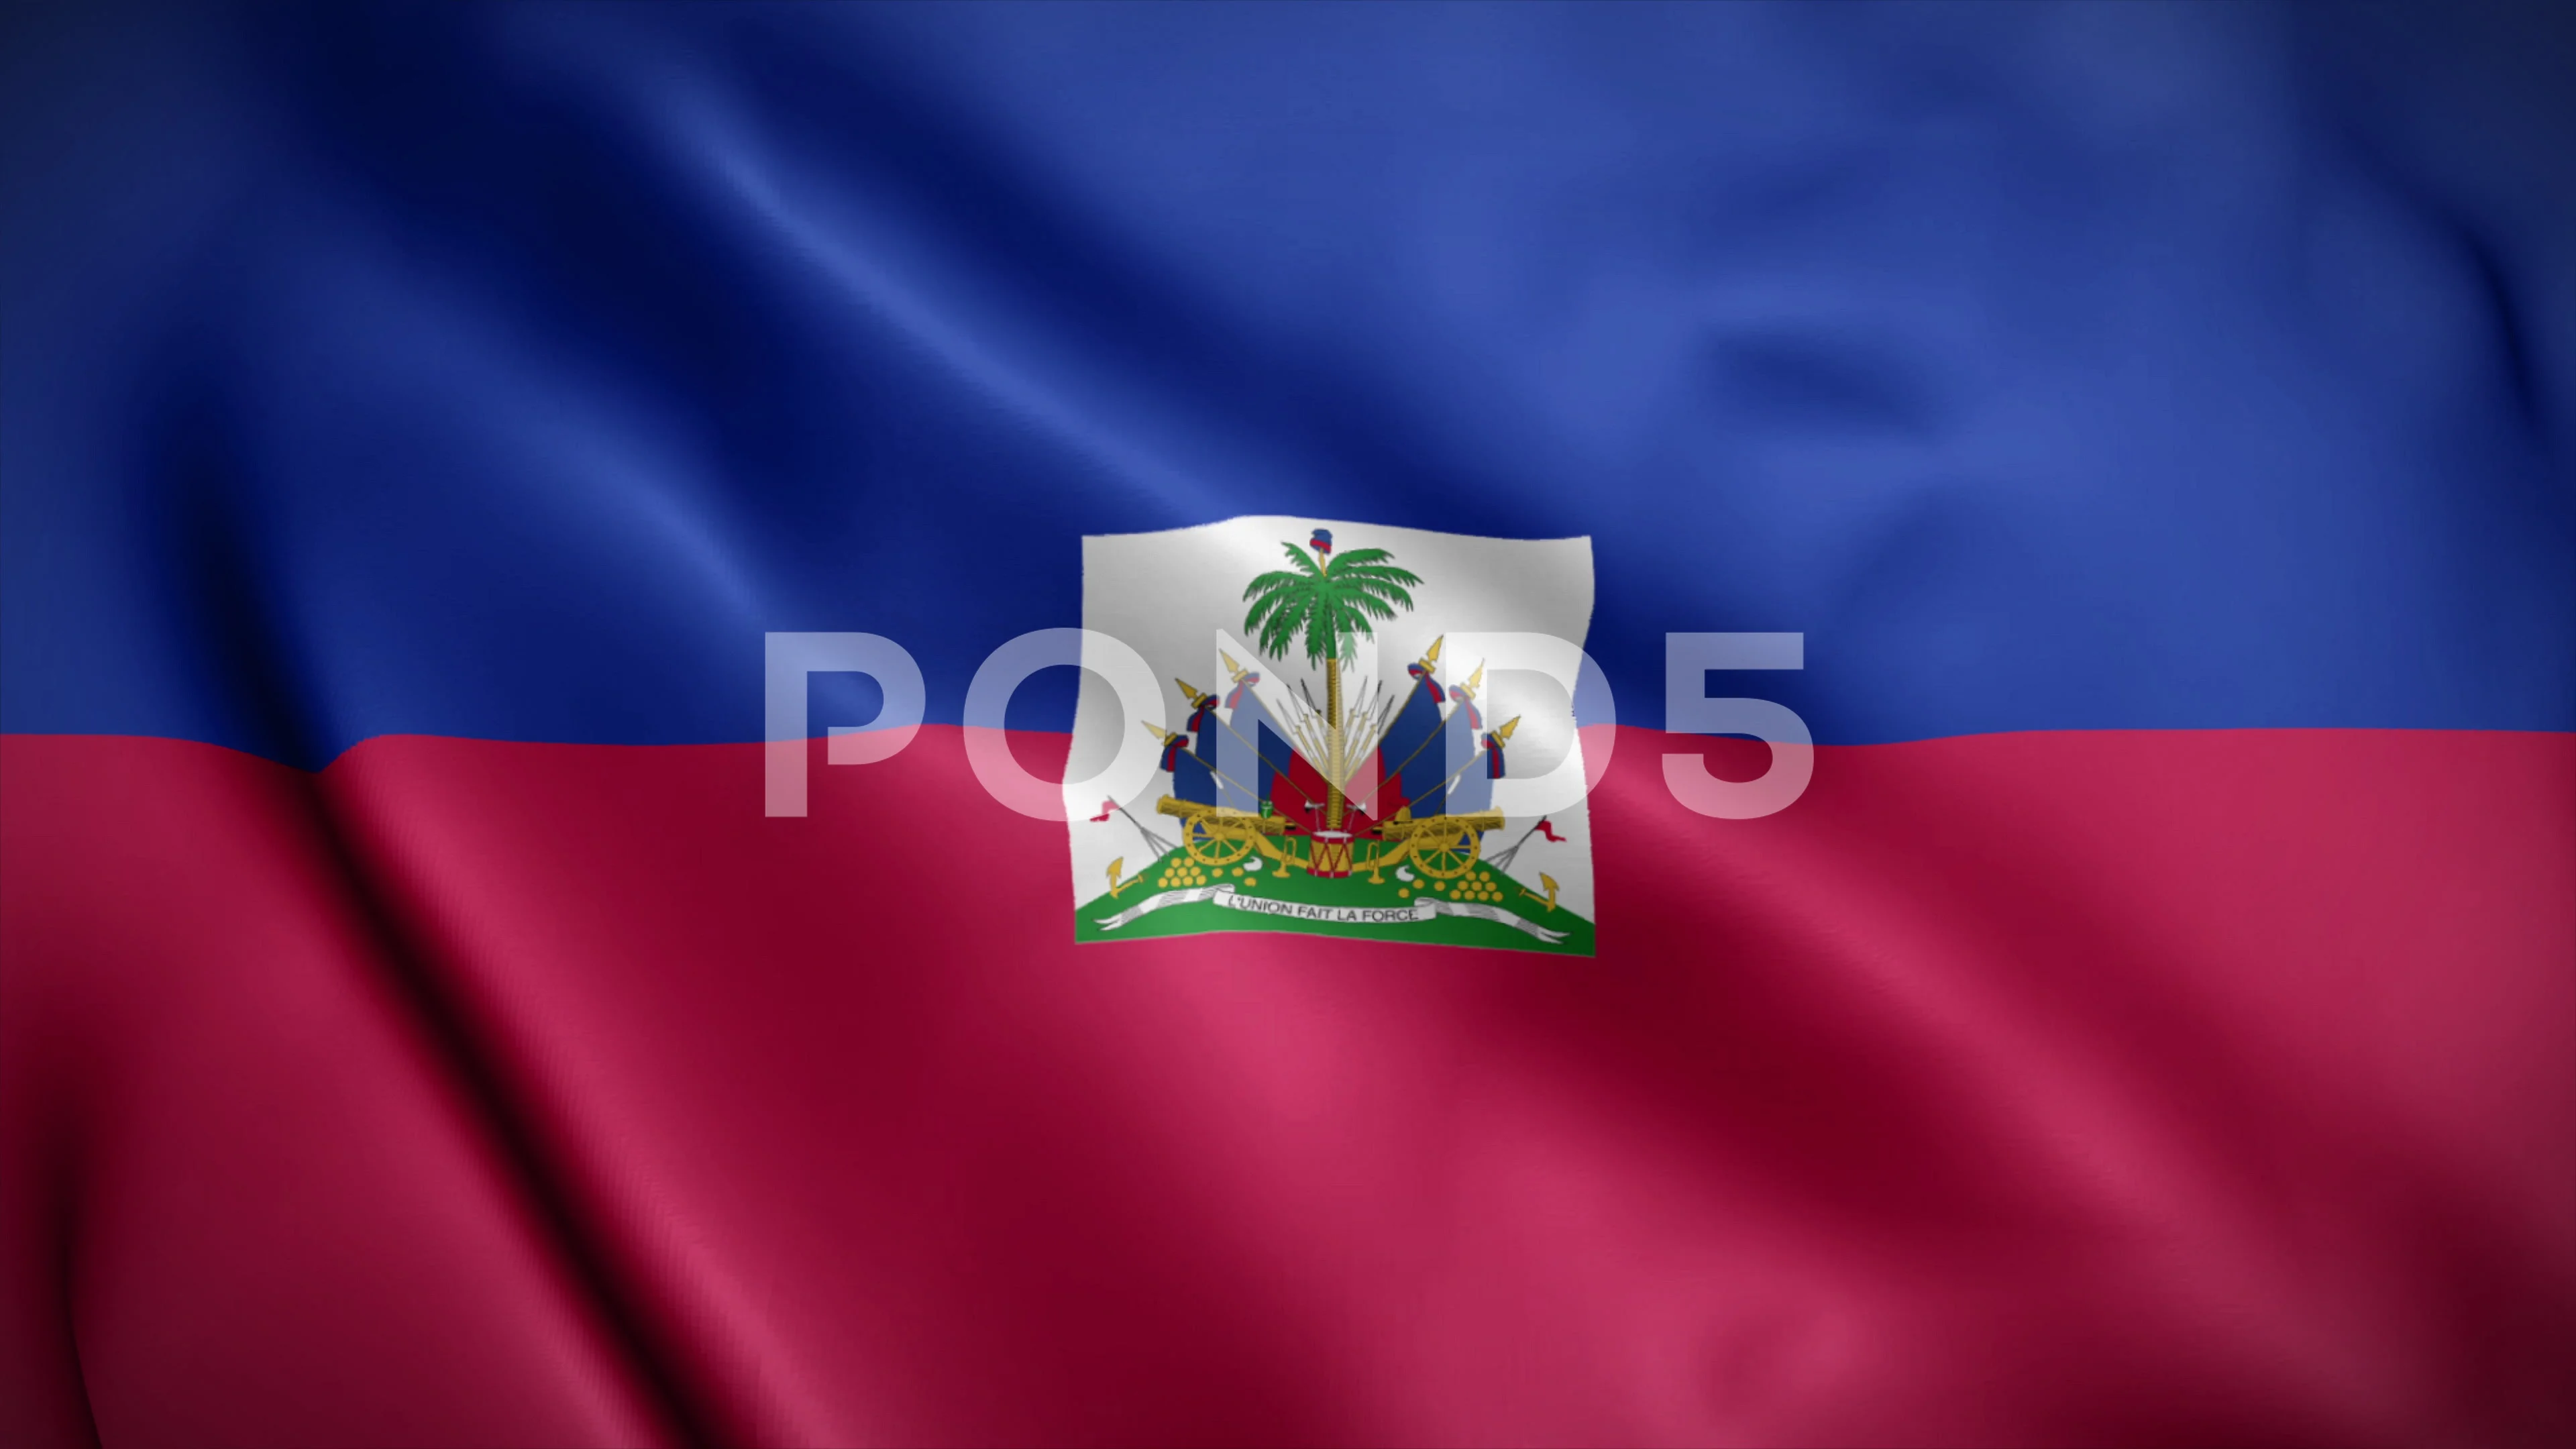 haitian flag background